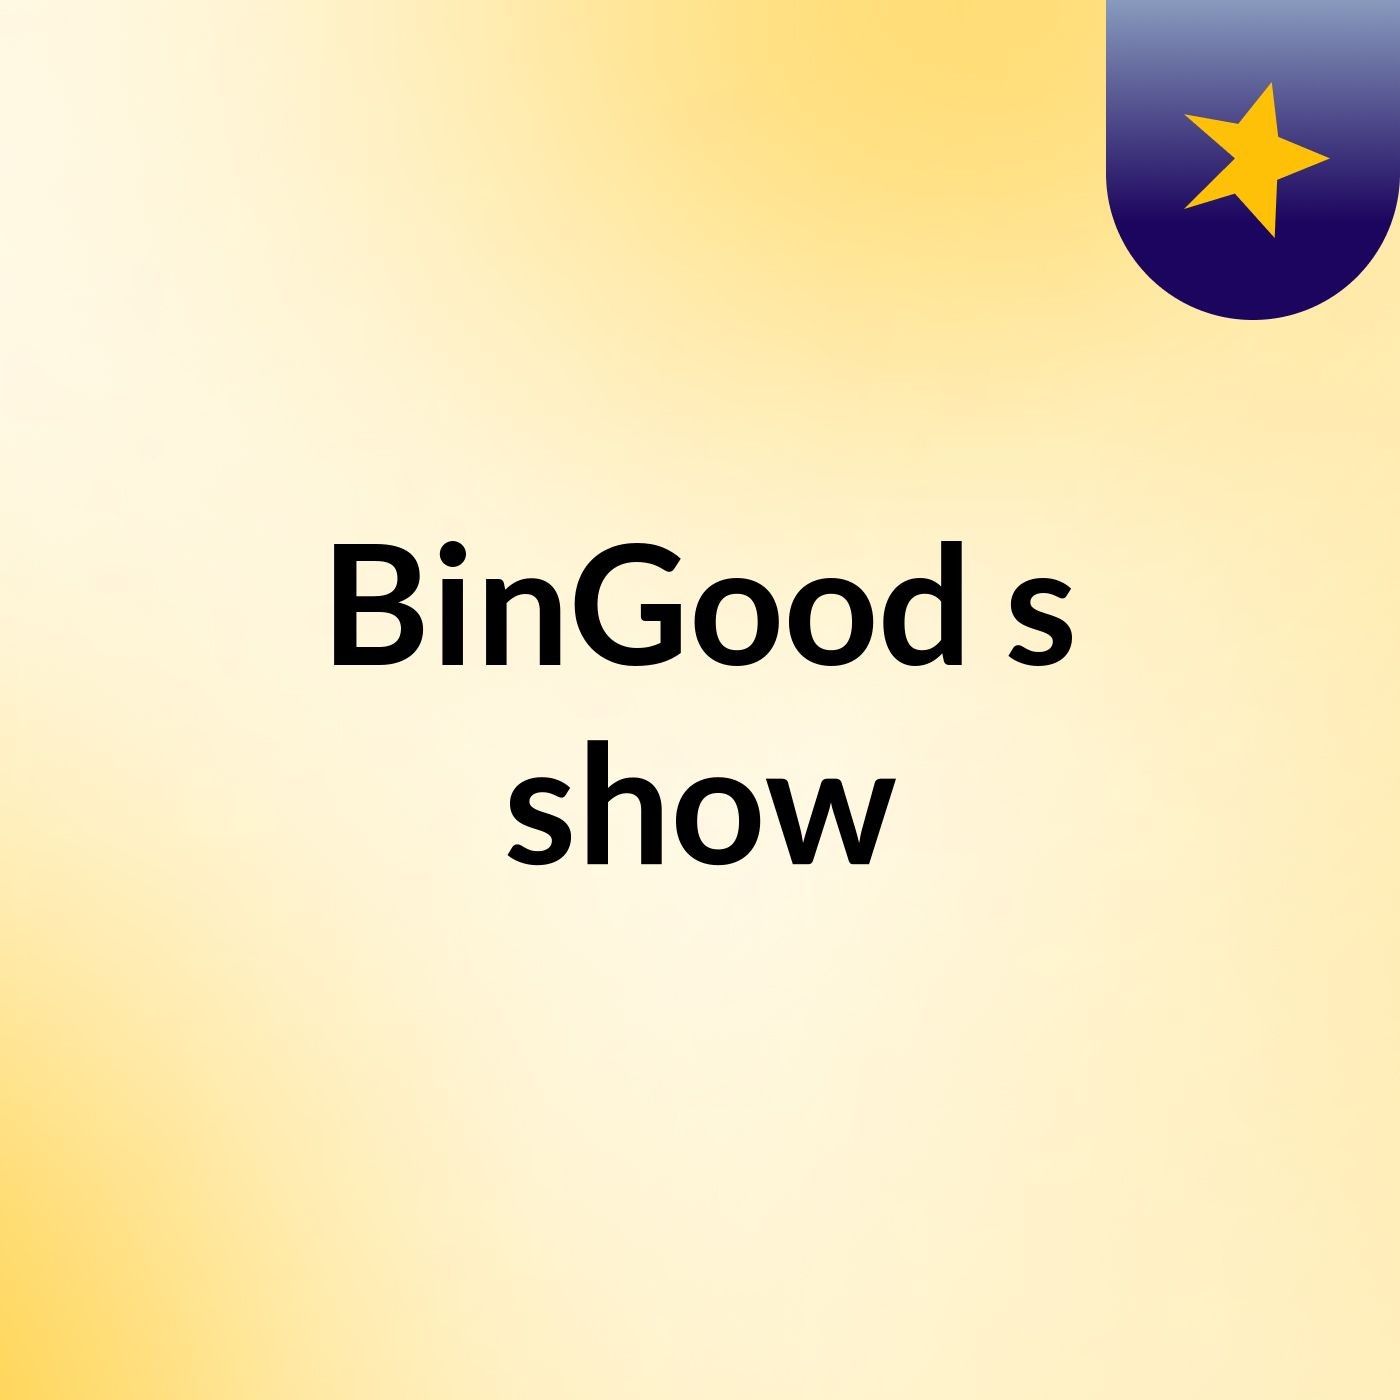 BinGood's show